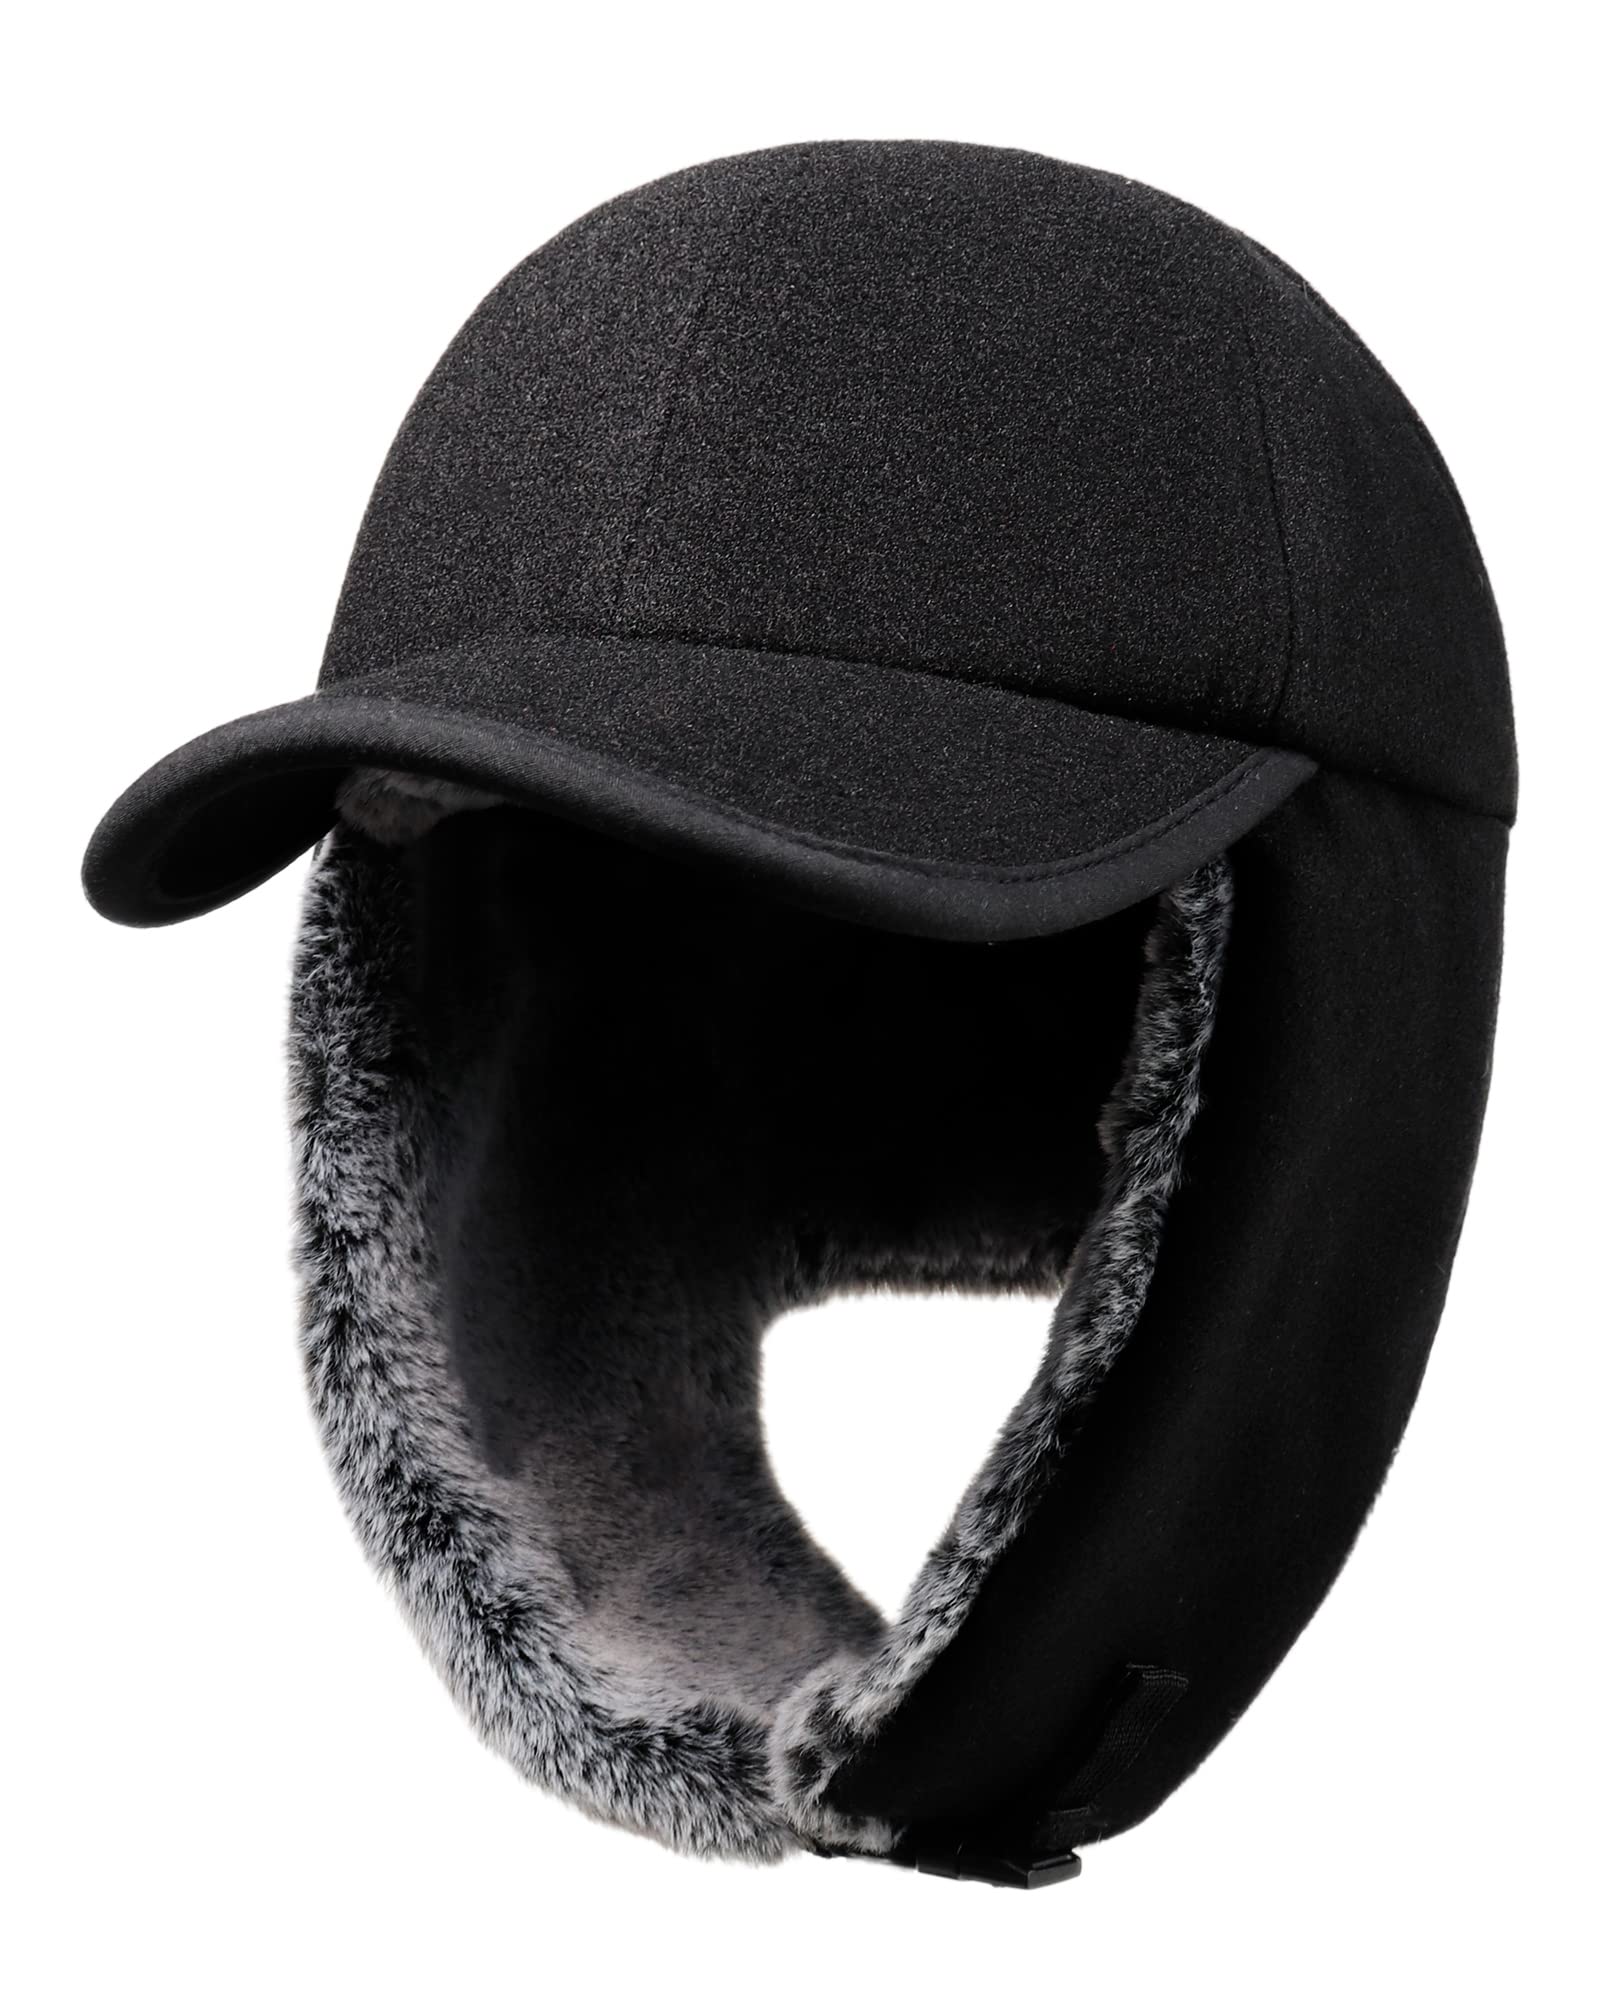 Gisdanchz Winter Baseball Cap with Long Ear Flaps - Woolen Blend Outer,  Faux Fur Fully Lined Black Medium-Large